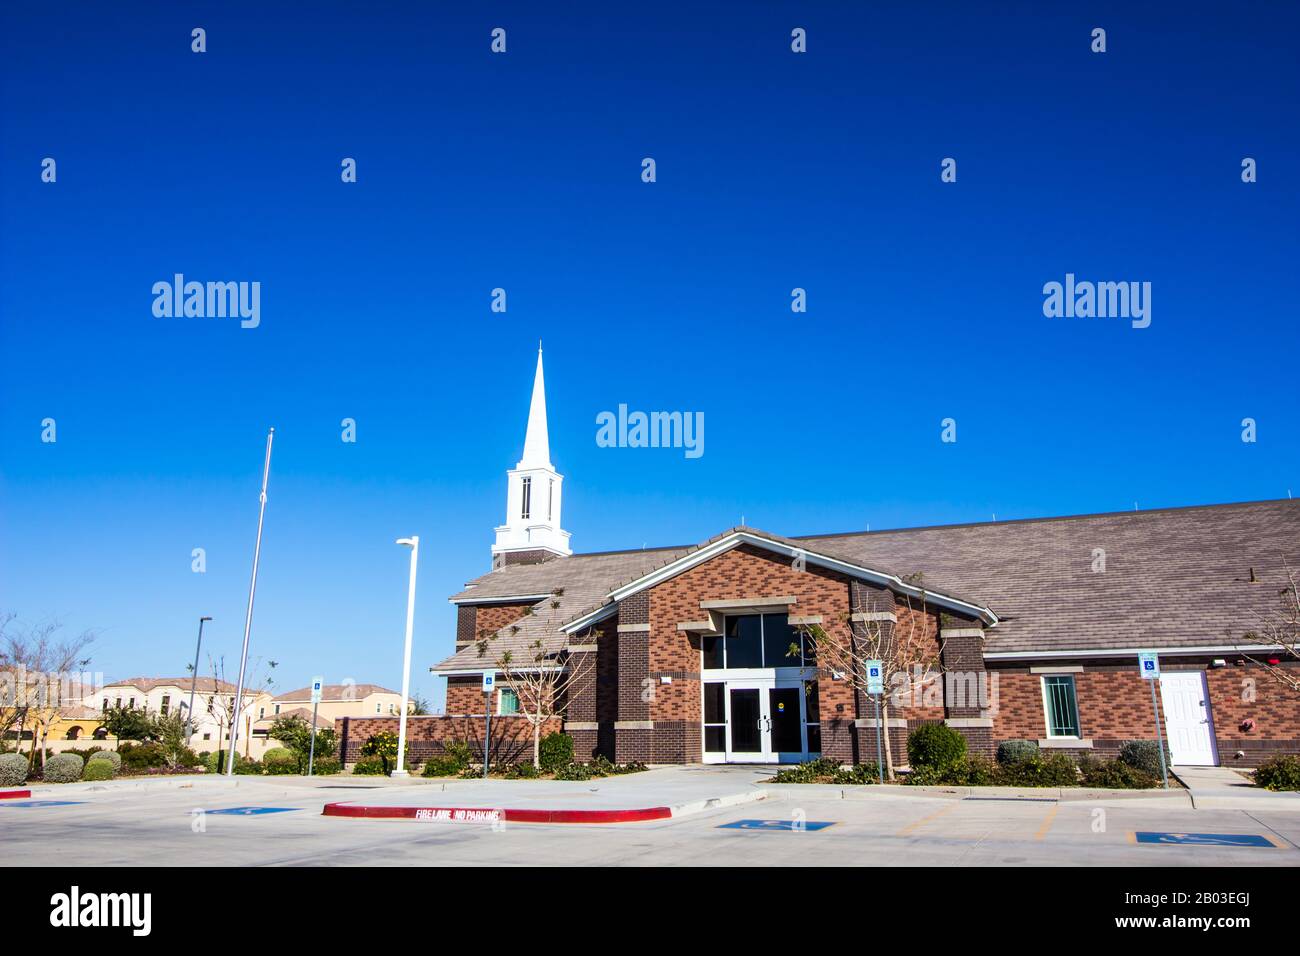 Entrance To Neighborhood Church With Spire Steeple Stock Photo